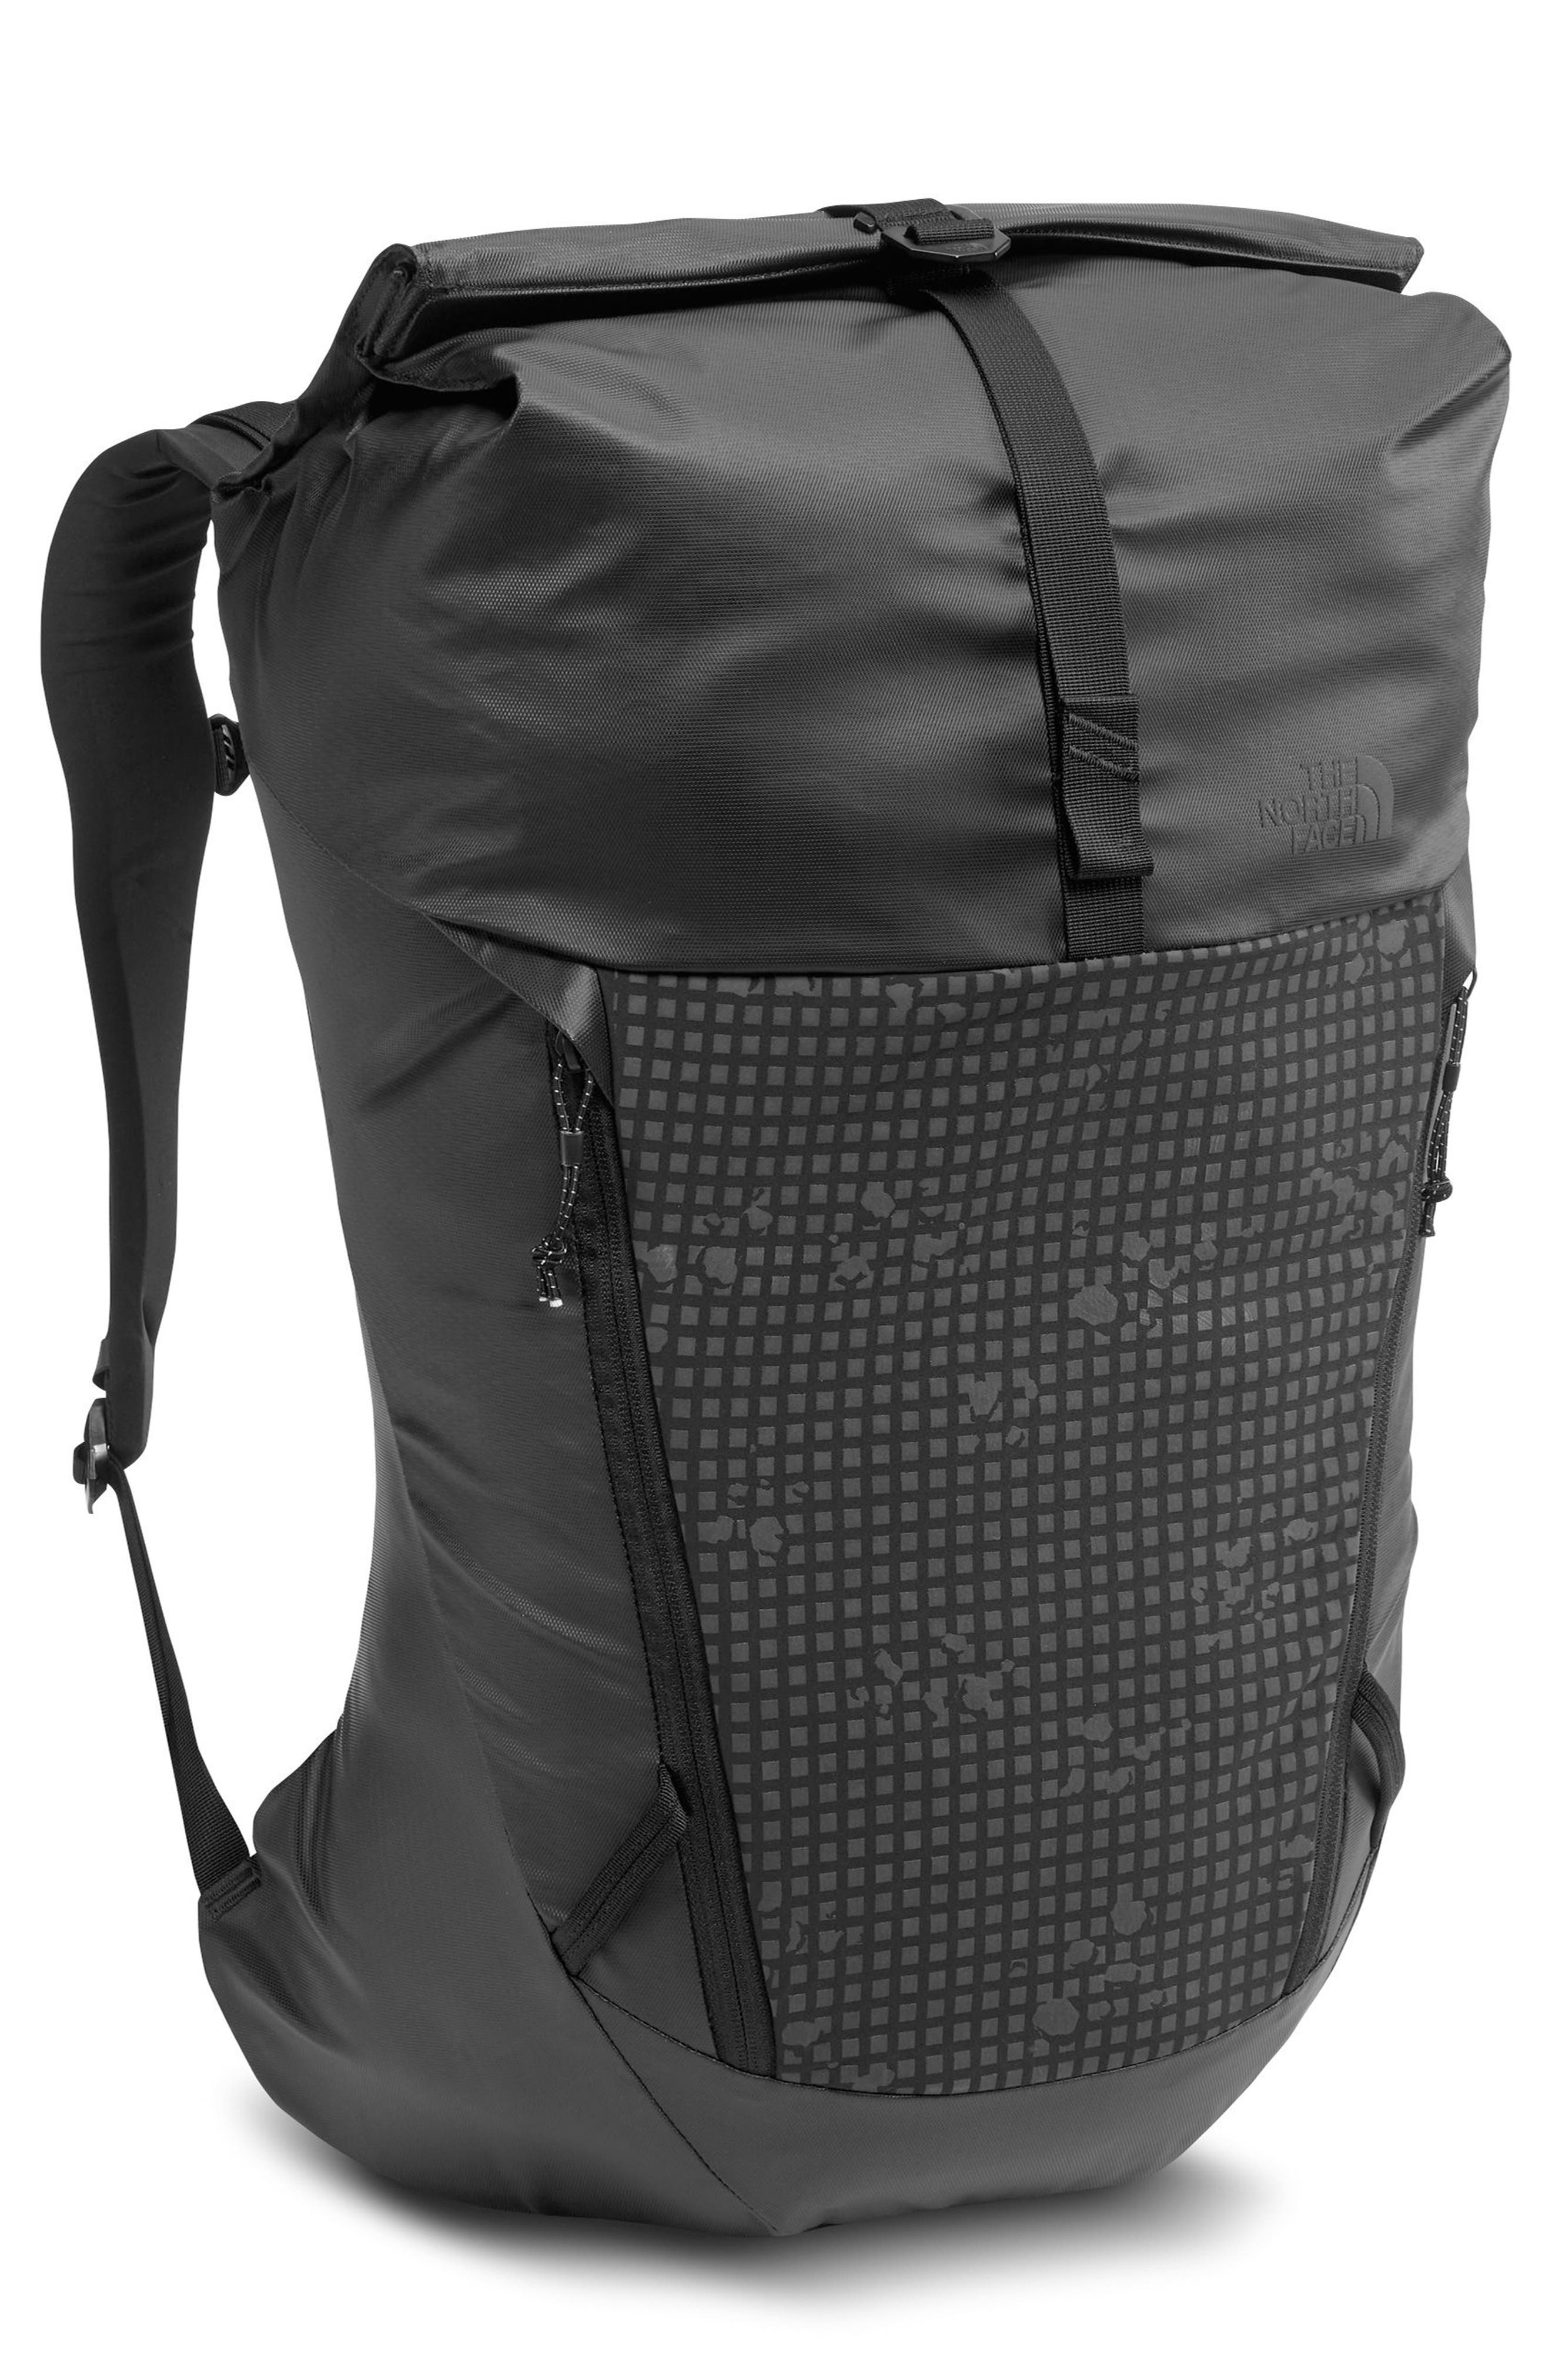 rovara backpack review